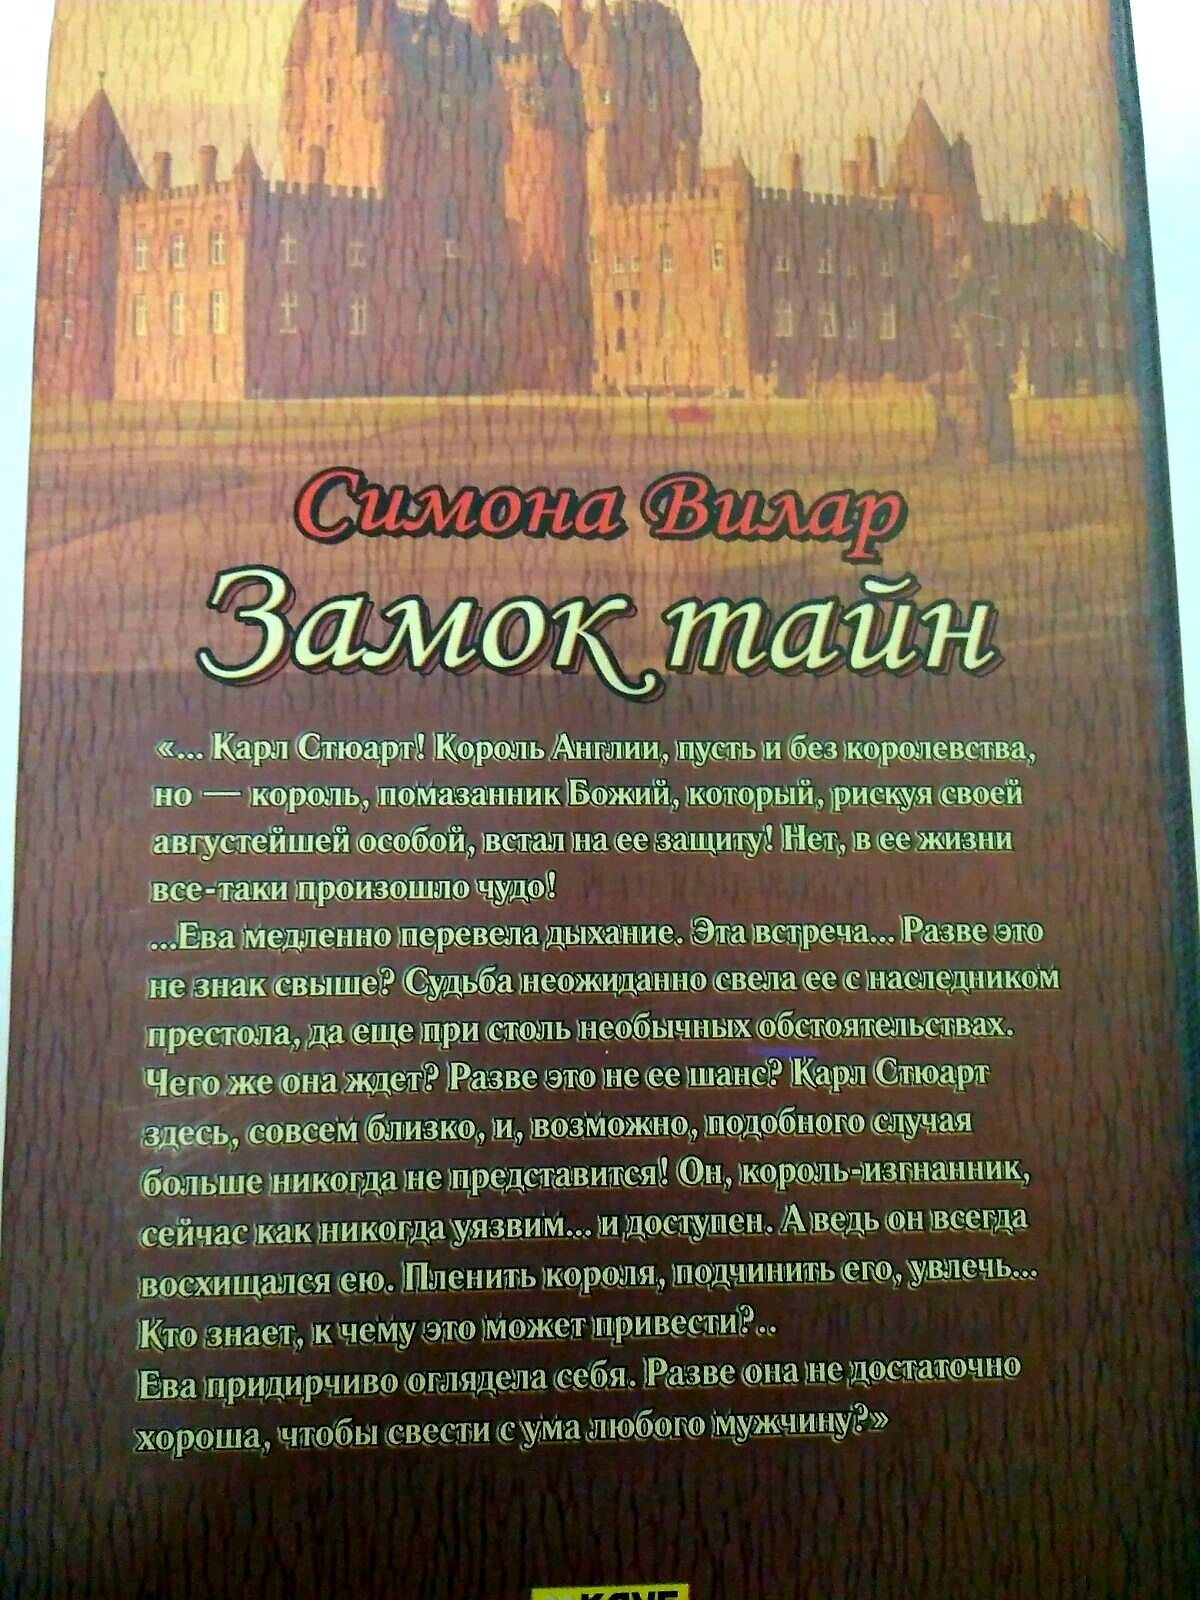 Симона Вилар "Замок тайн", тверда обкладинка, читабельний шрифт